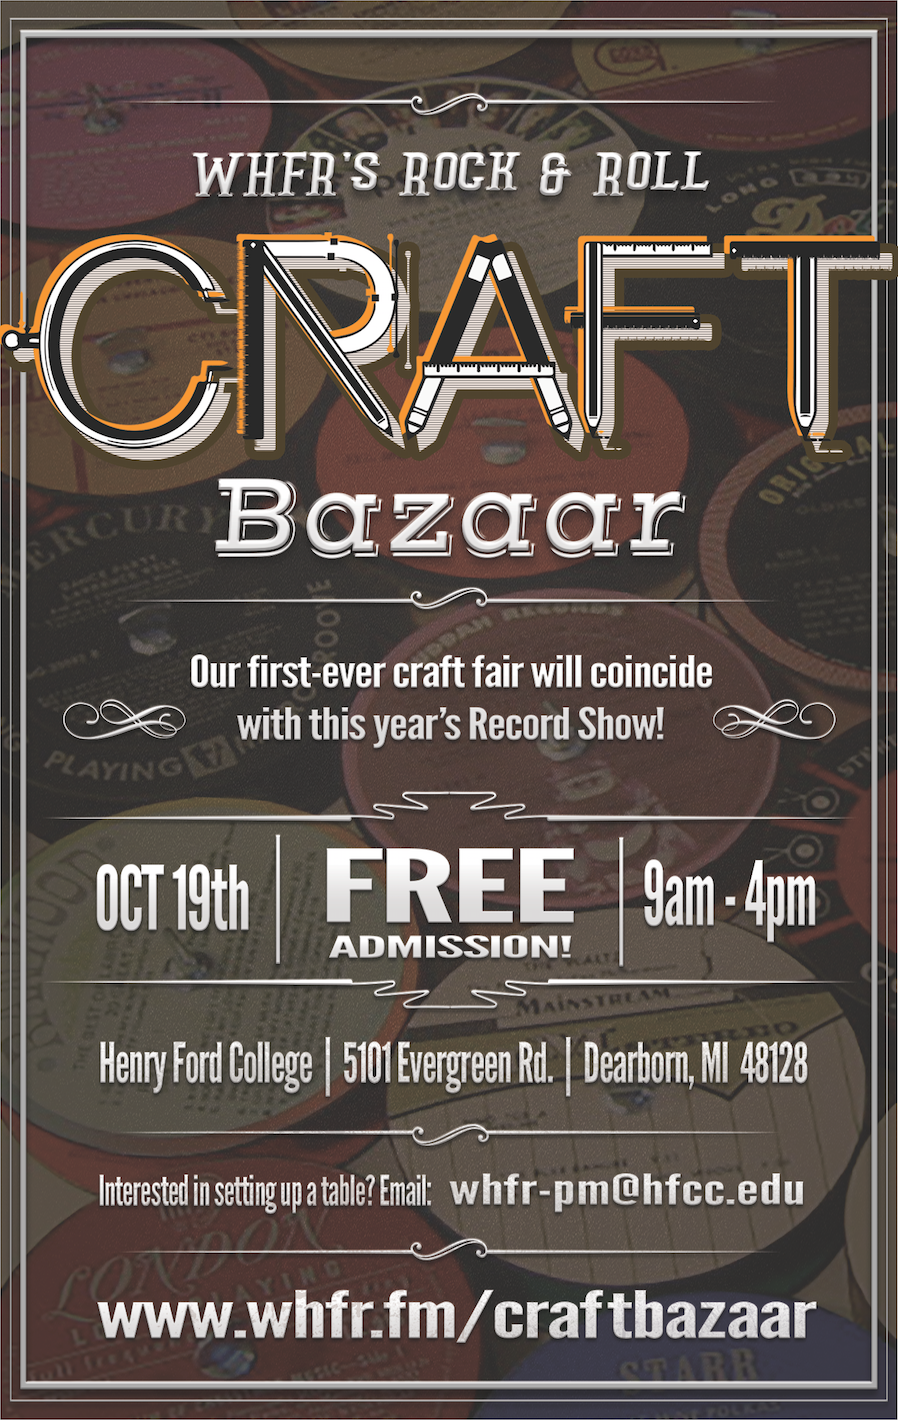 Craft Bazaar information